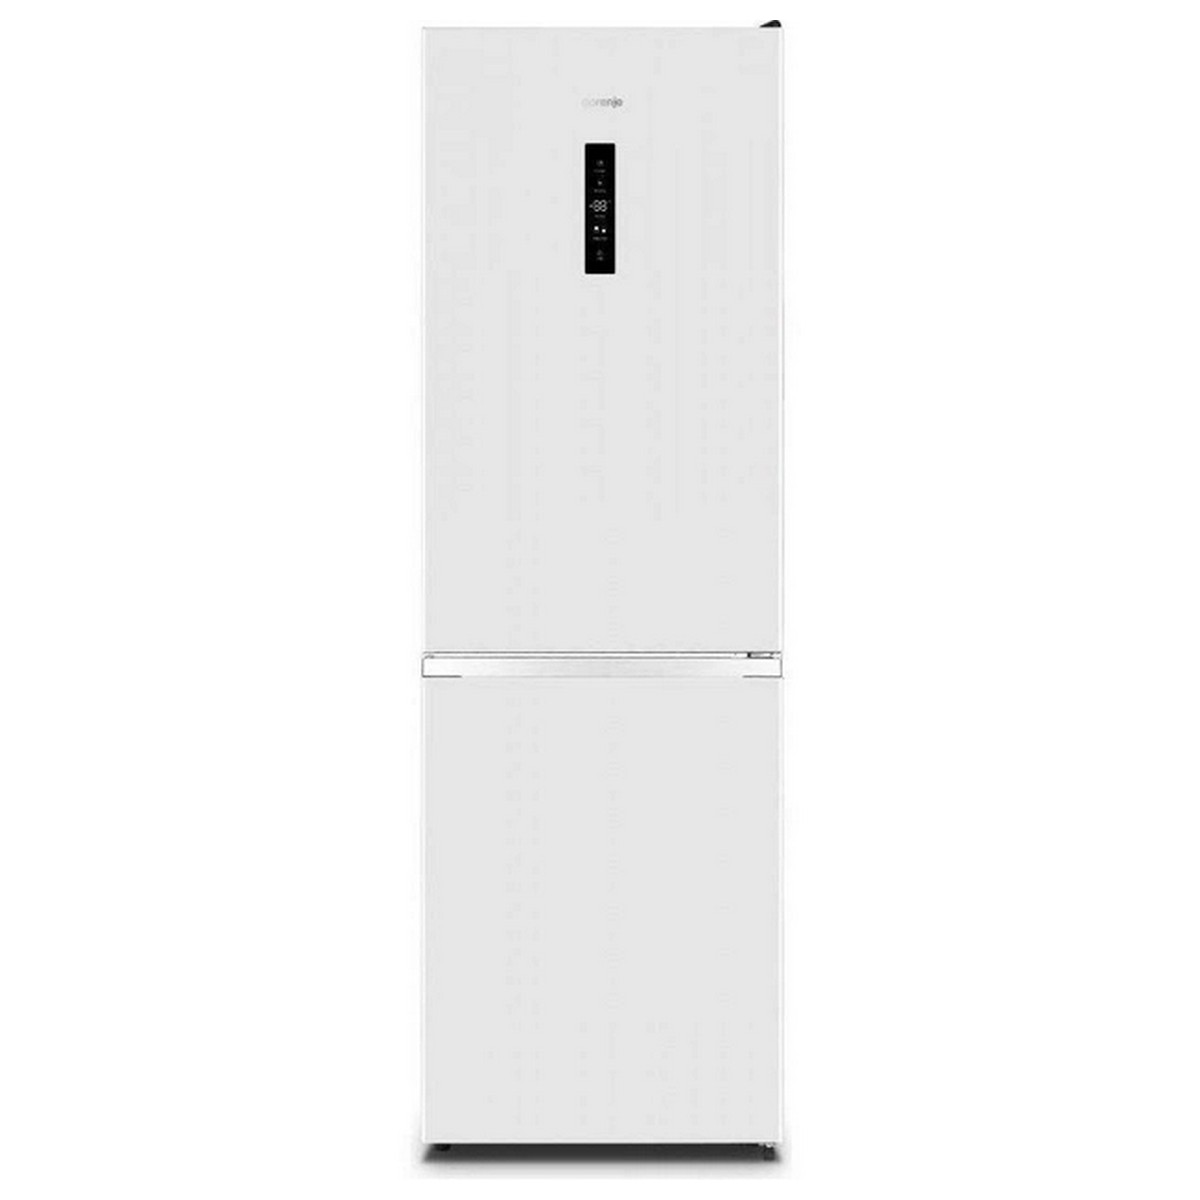 Холодильник Gorenje с нижней морозильной камерой, 185х60х60см, 2 дв., Х-207л, М-93л, A++, NoFrost Plus,